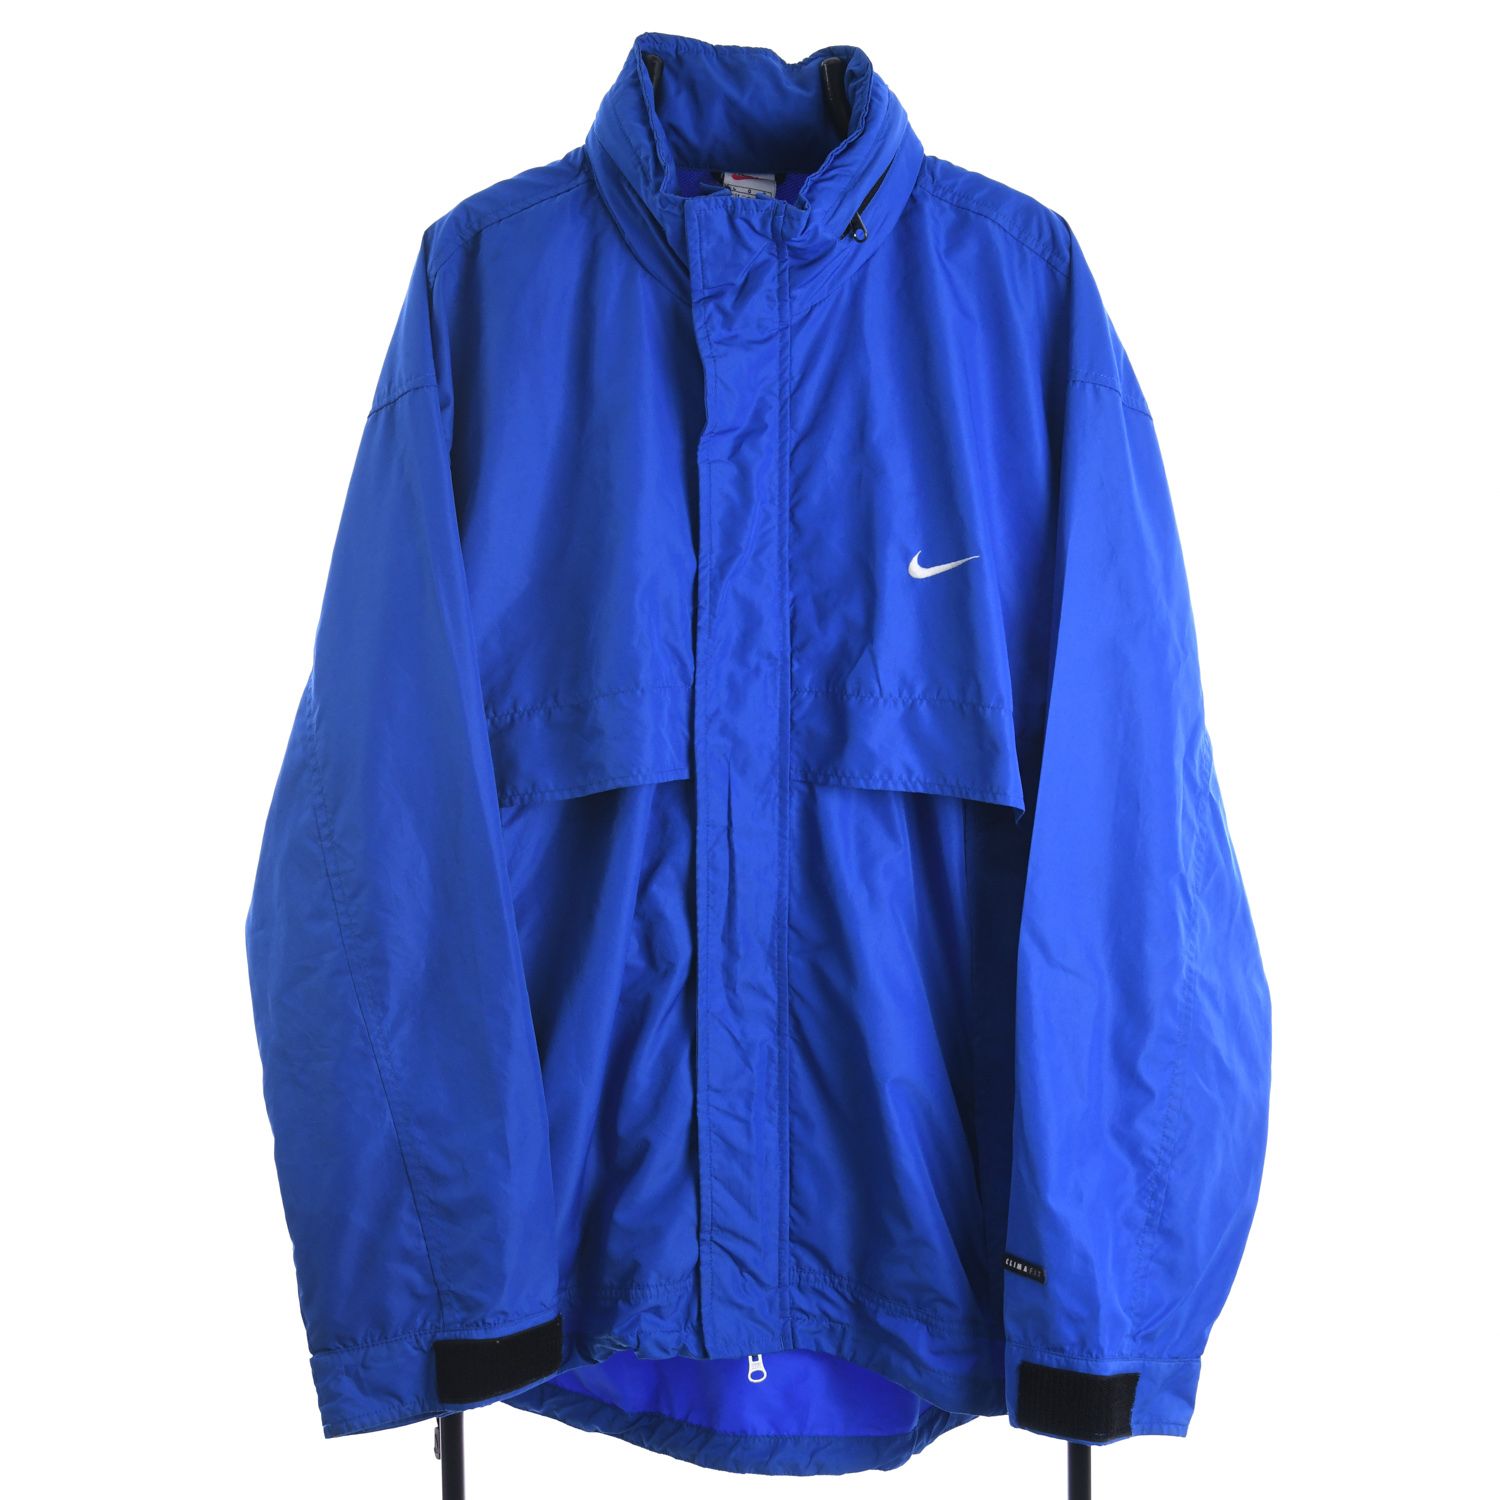 Nike 1990s Shell Jacket